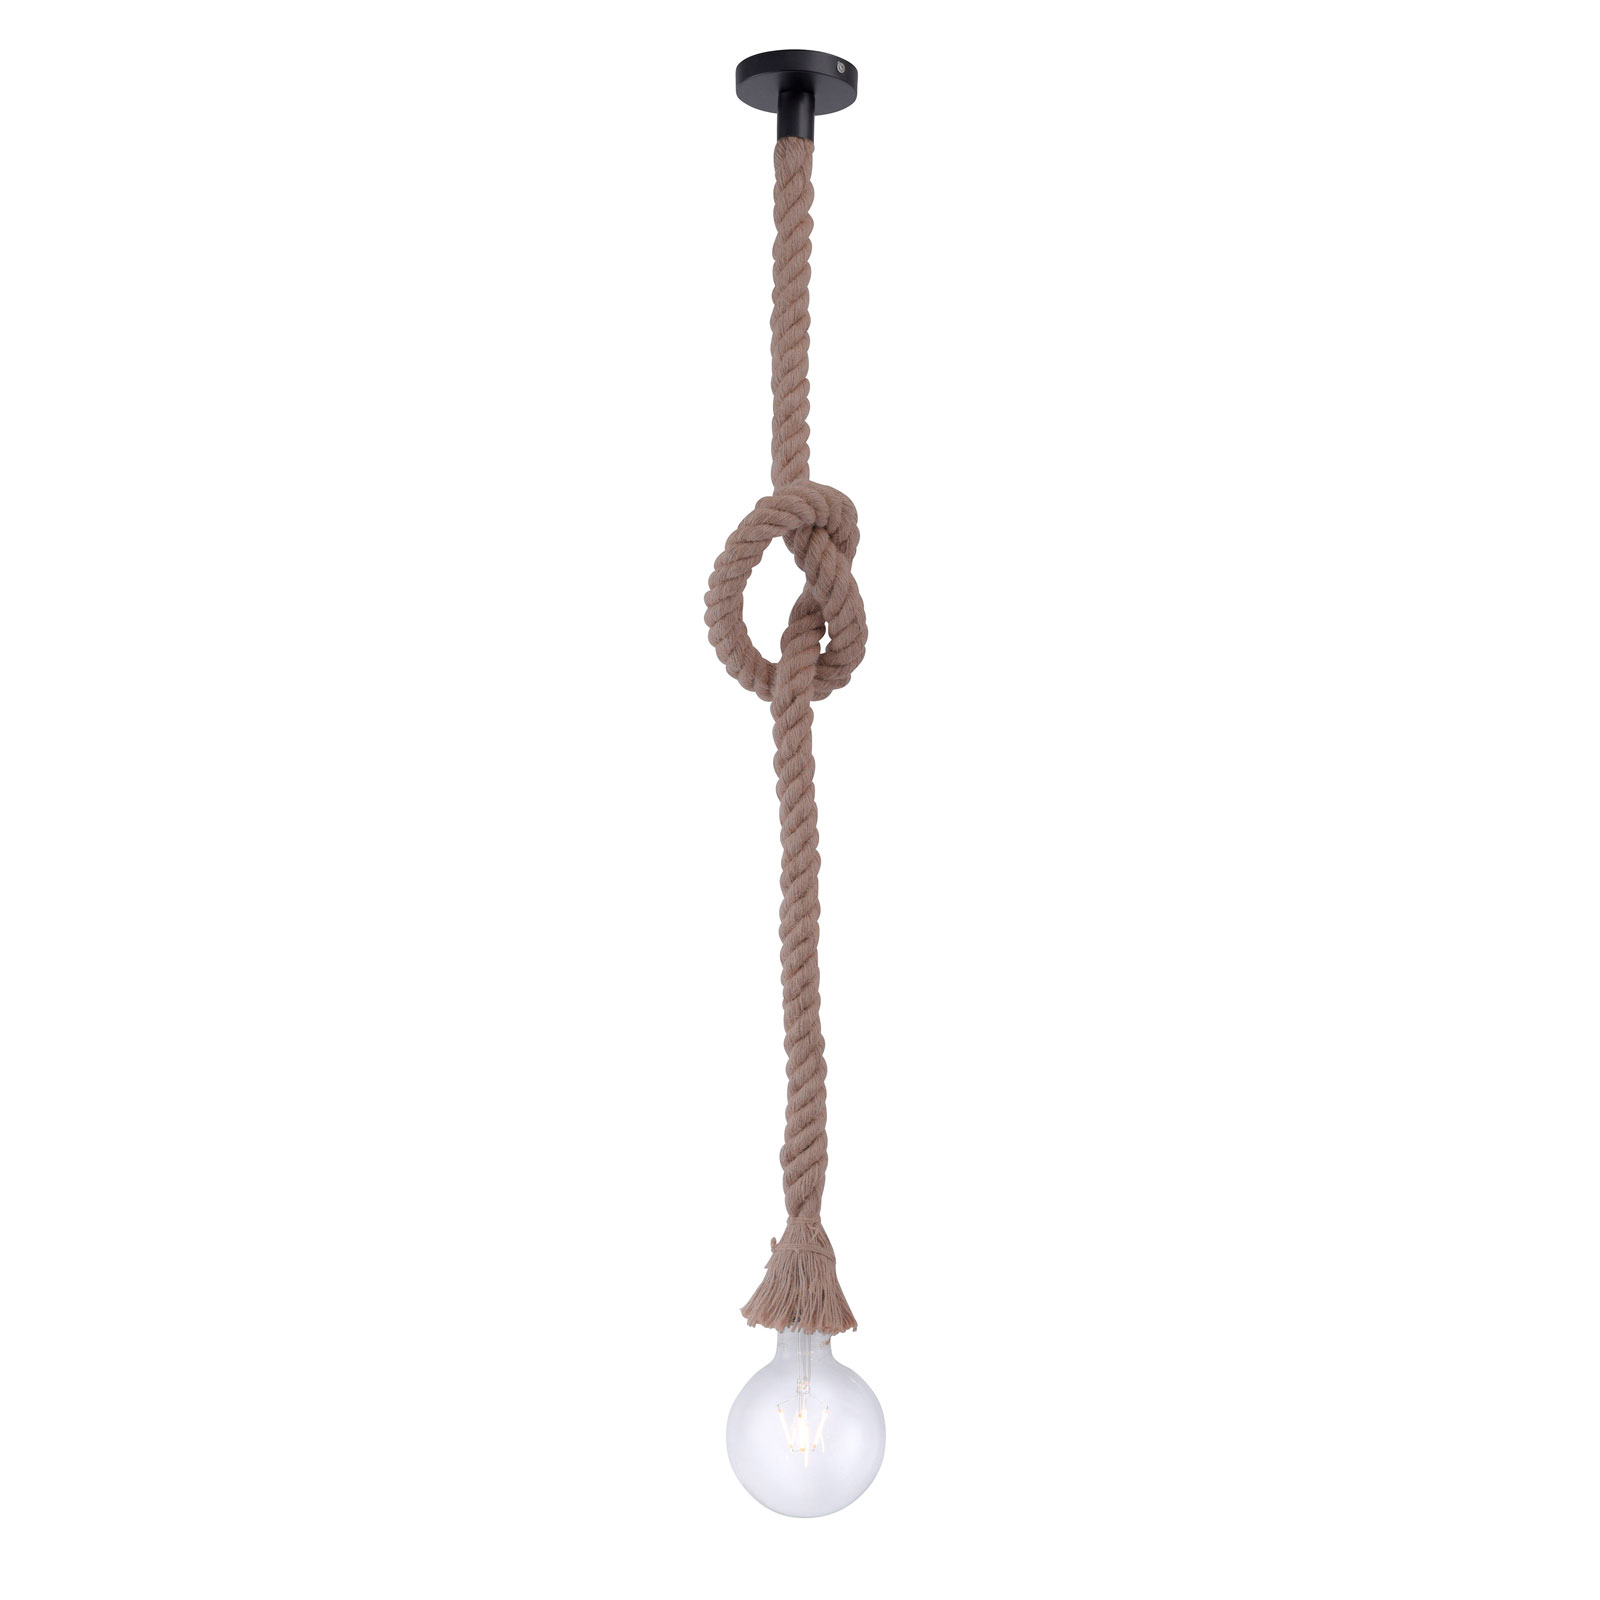 Hanglamp Rope met kabel, 1-lamp